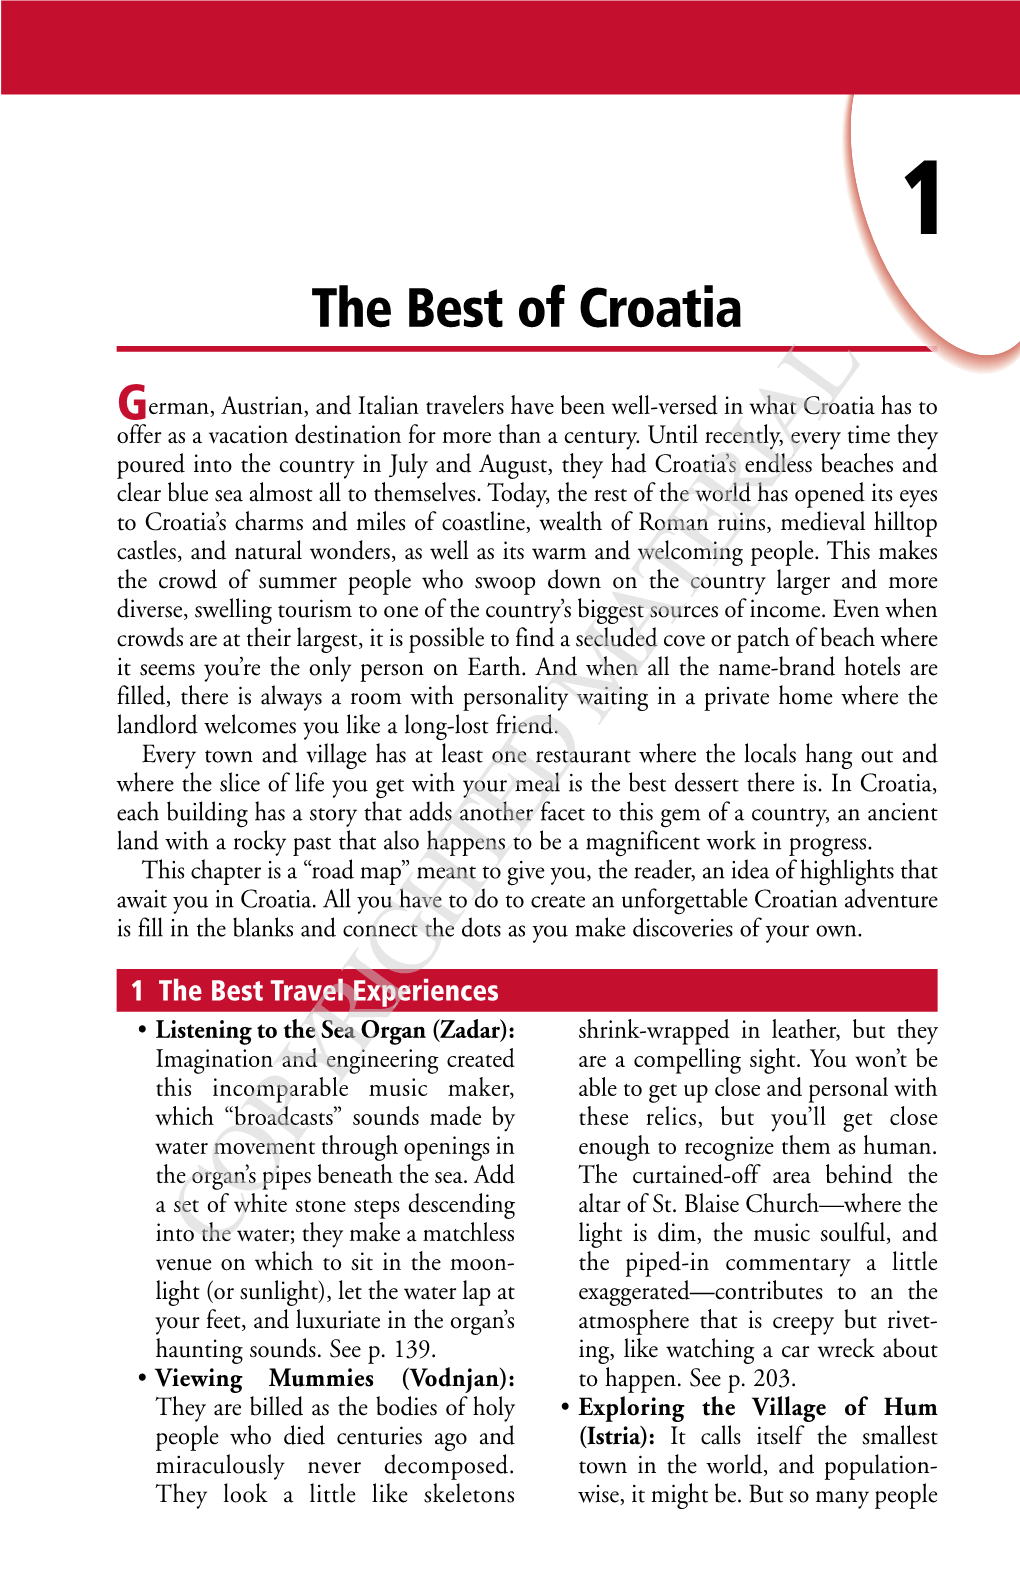 The Best of Croatia